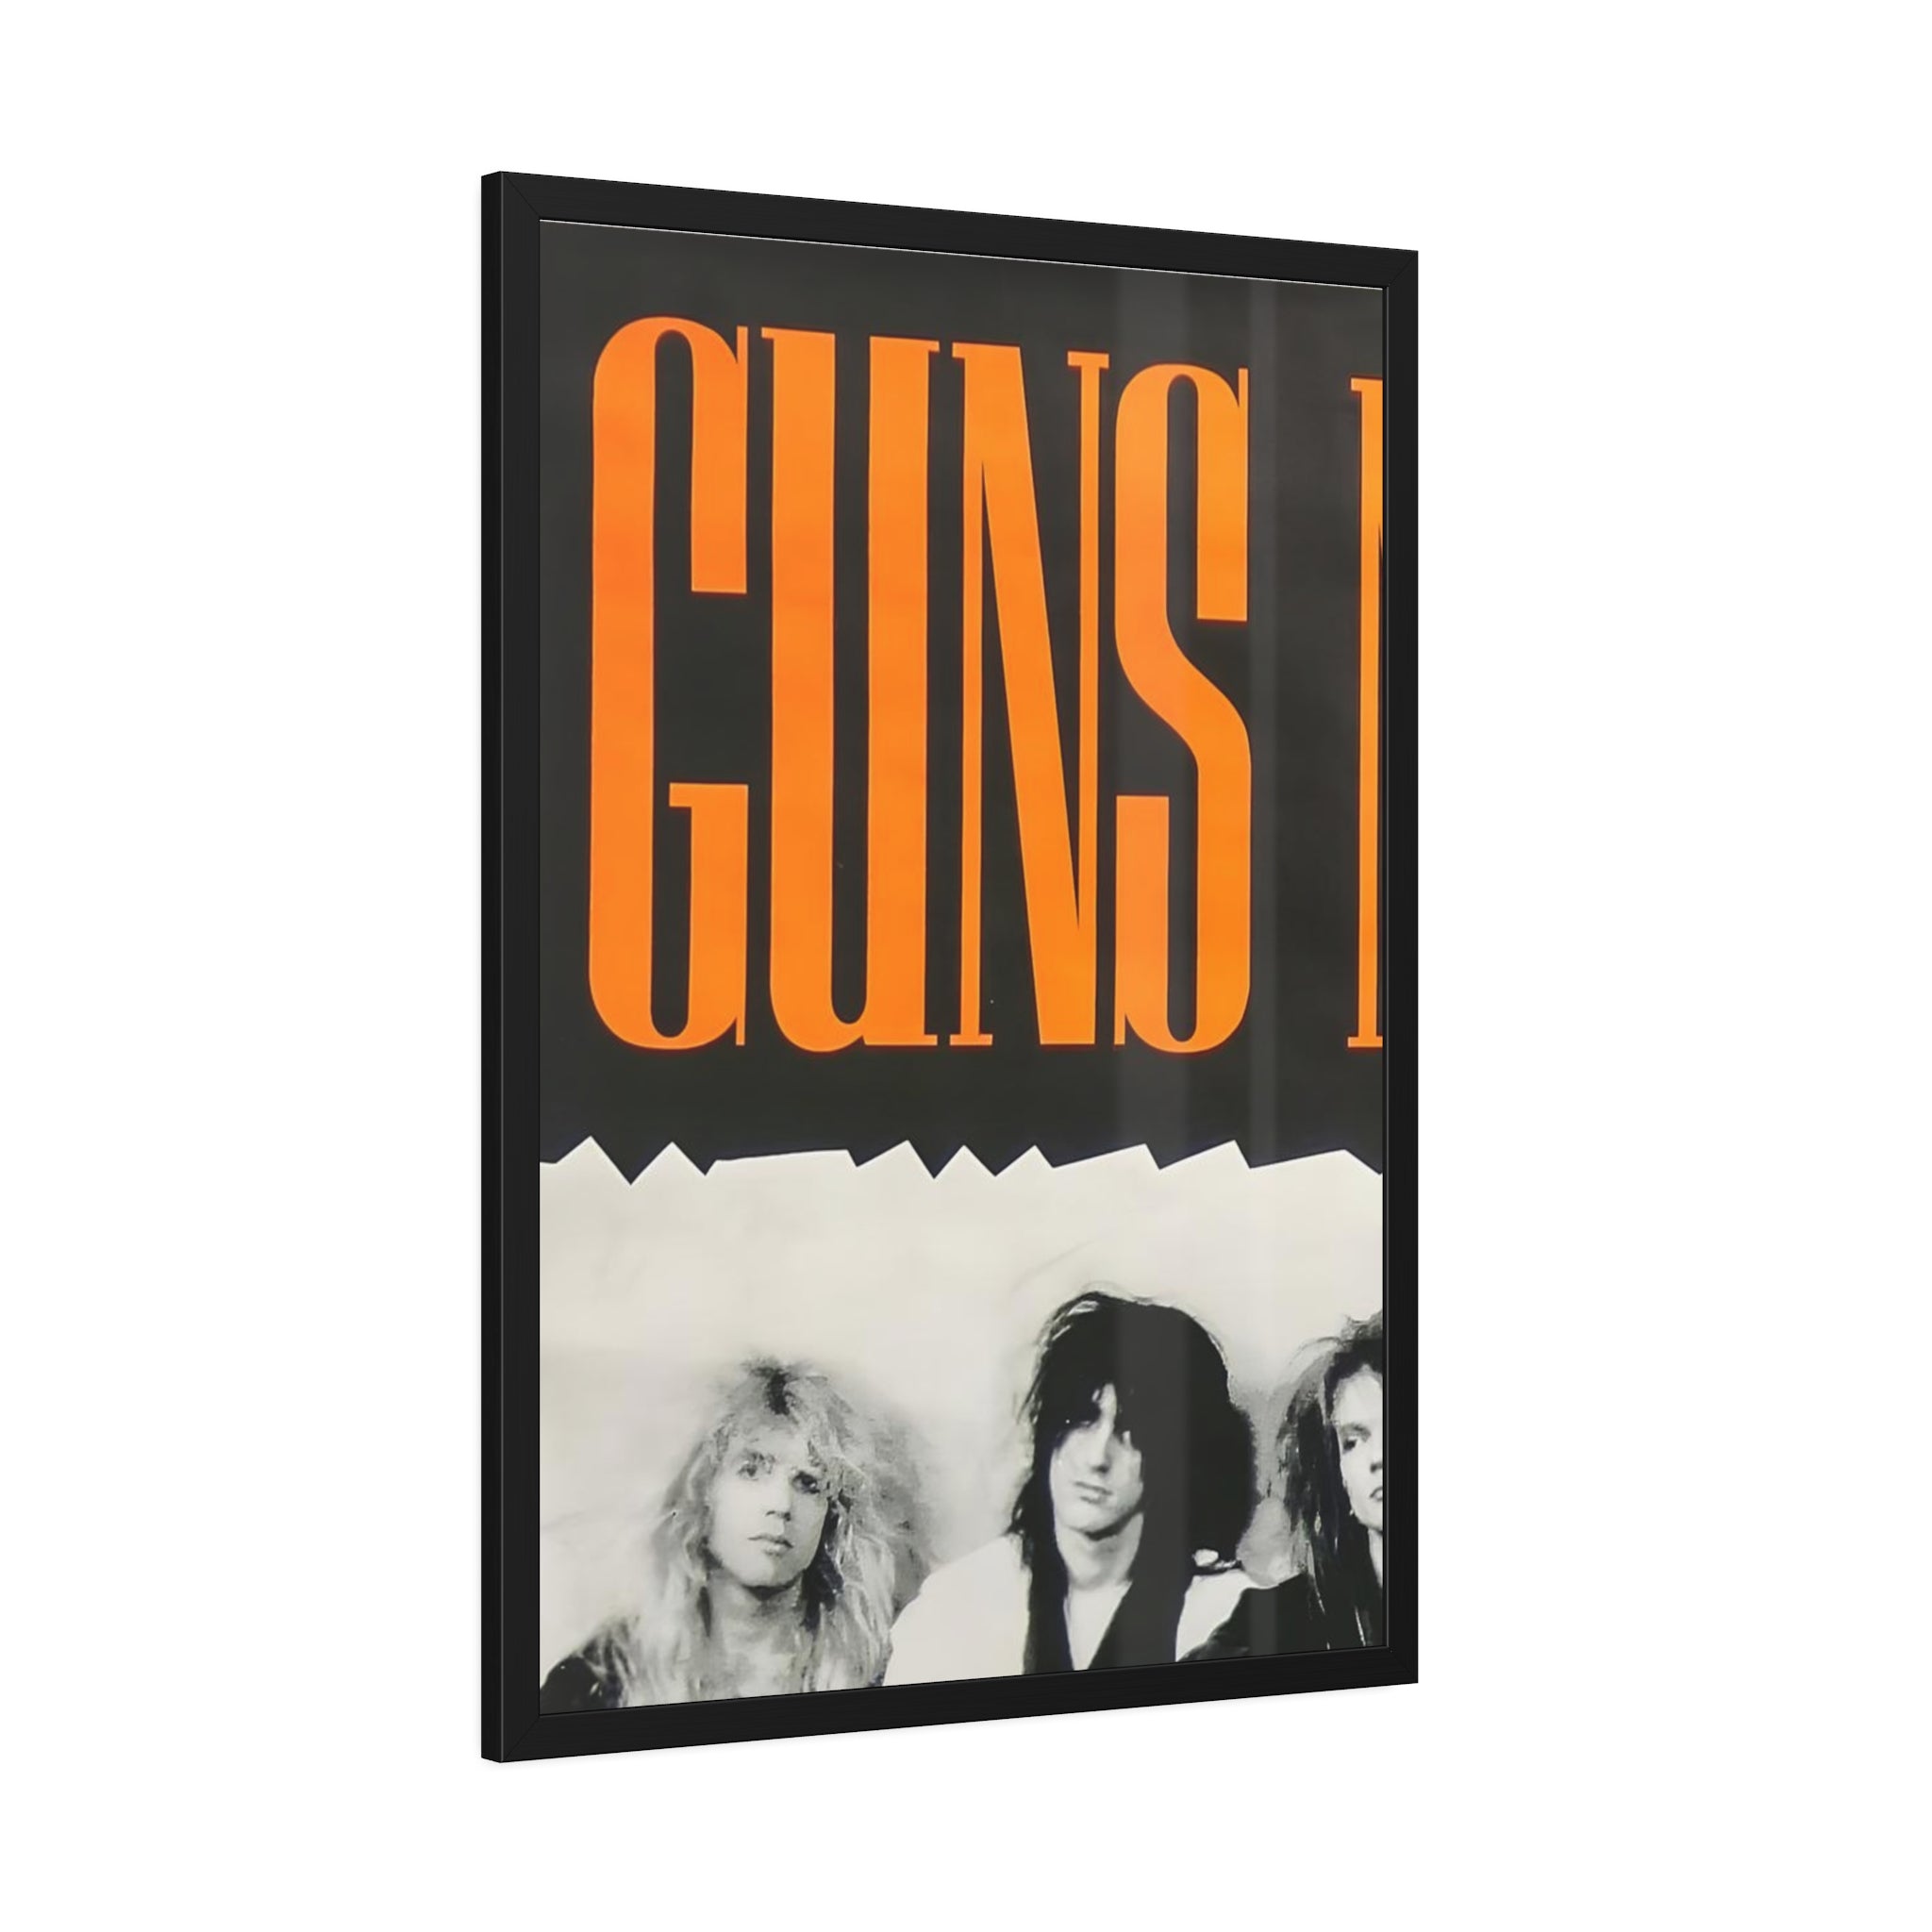 Guns N' Roses Concert Poster III